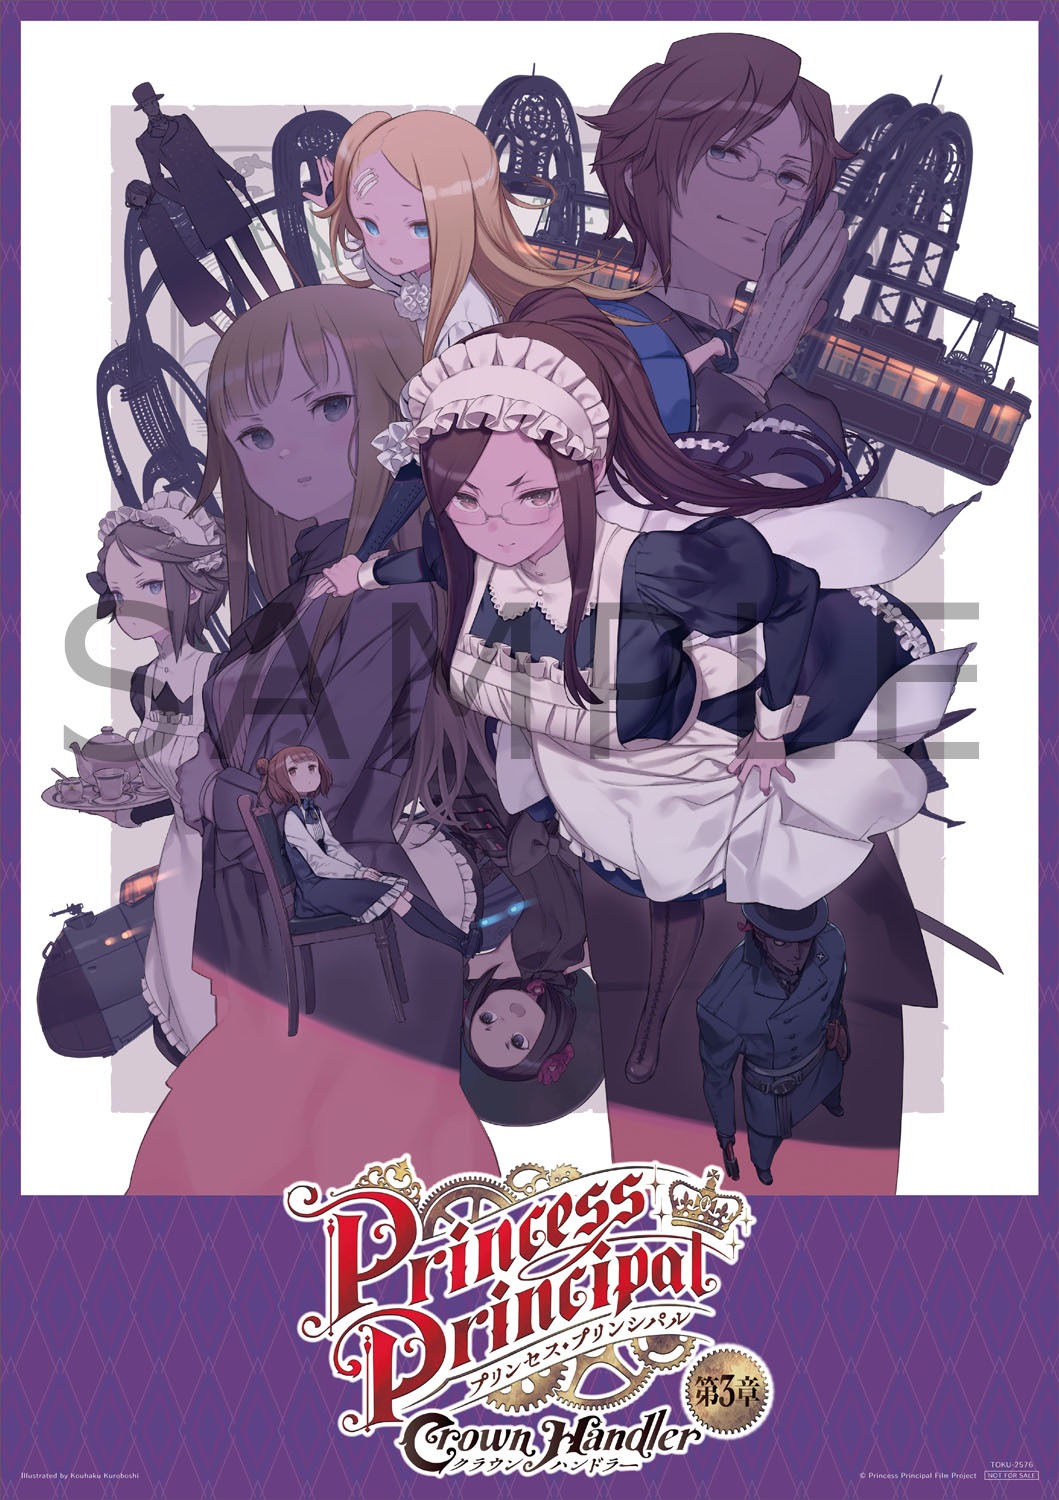 PRODUCTS_BD | 『プリンセス・プリンシパル Crown Handler』公式サイト